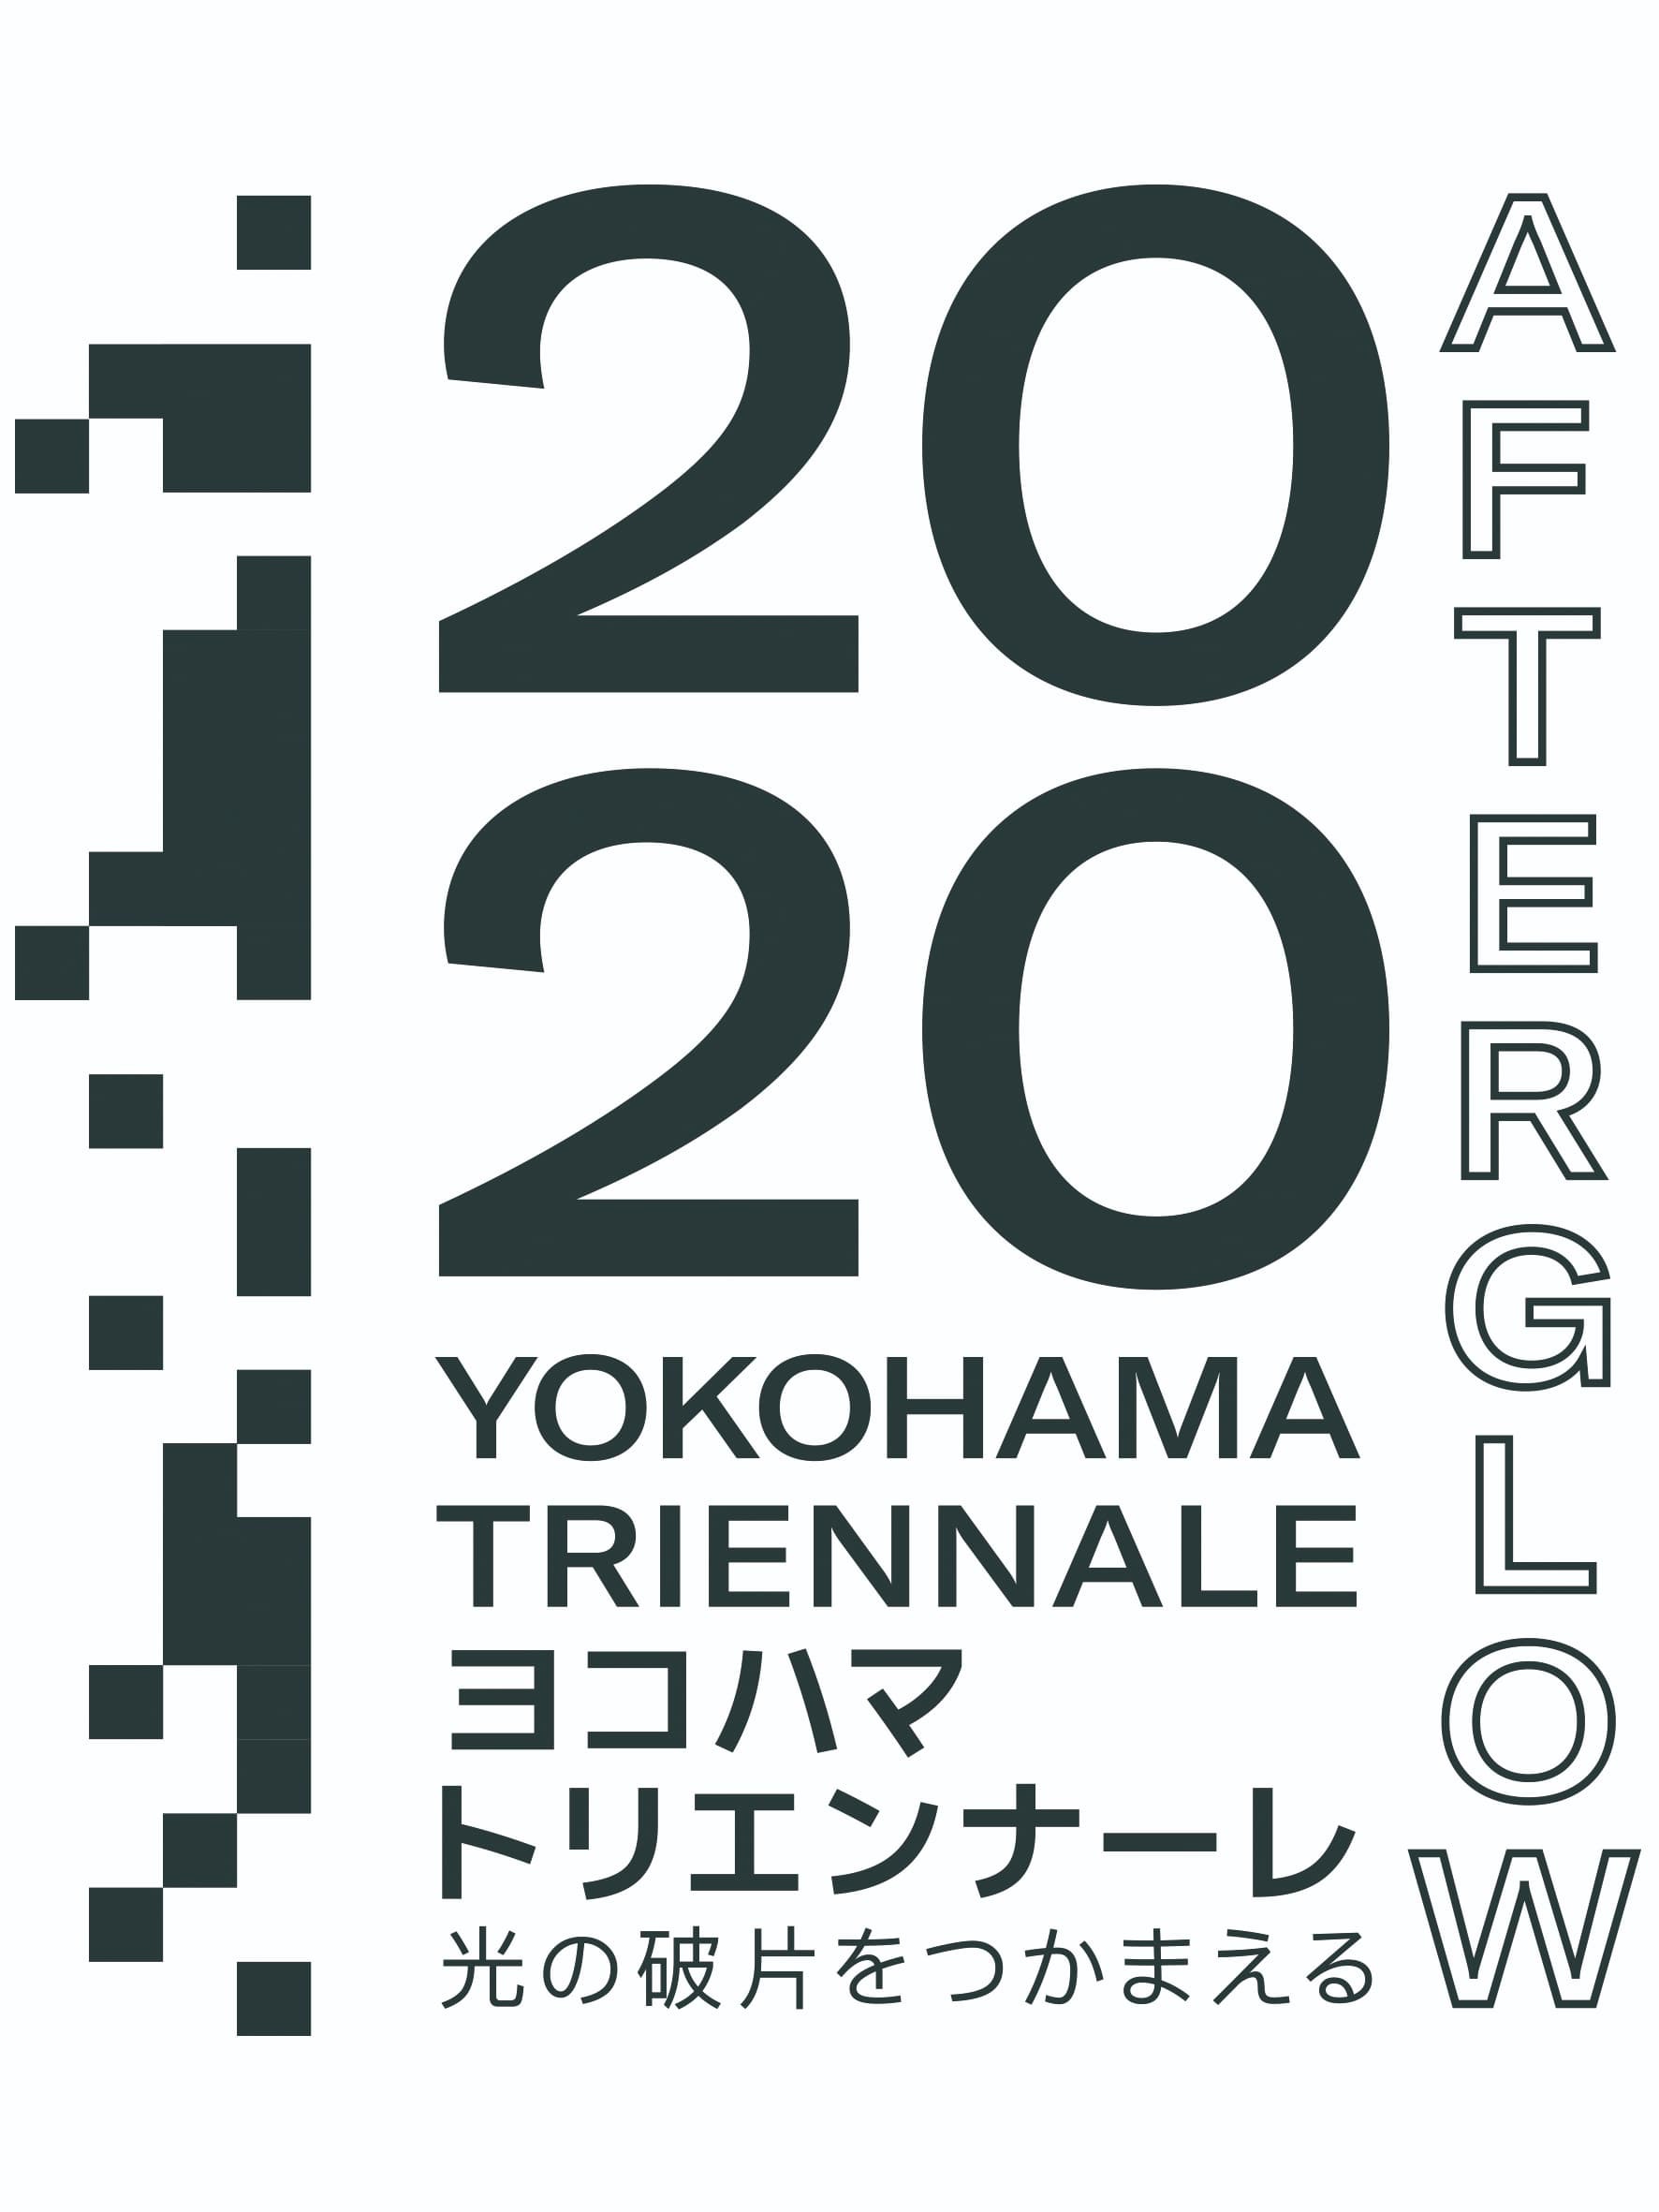 Yokohama Triennale 2020: International contemporary art exhibition to be held from July 2020